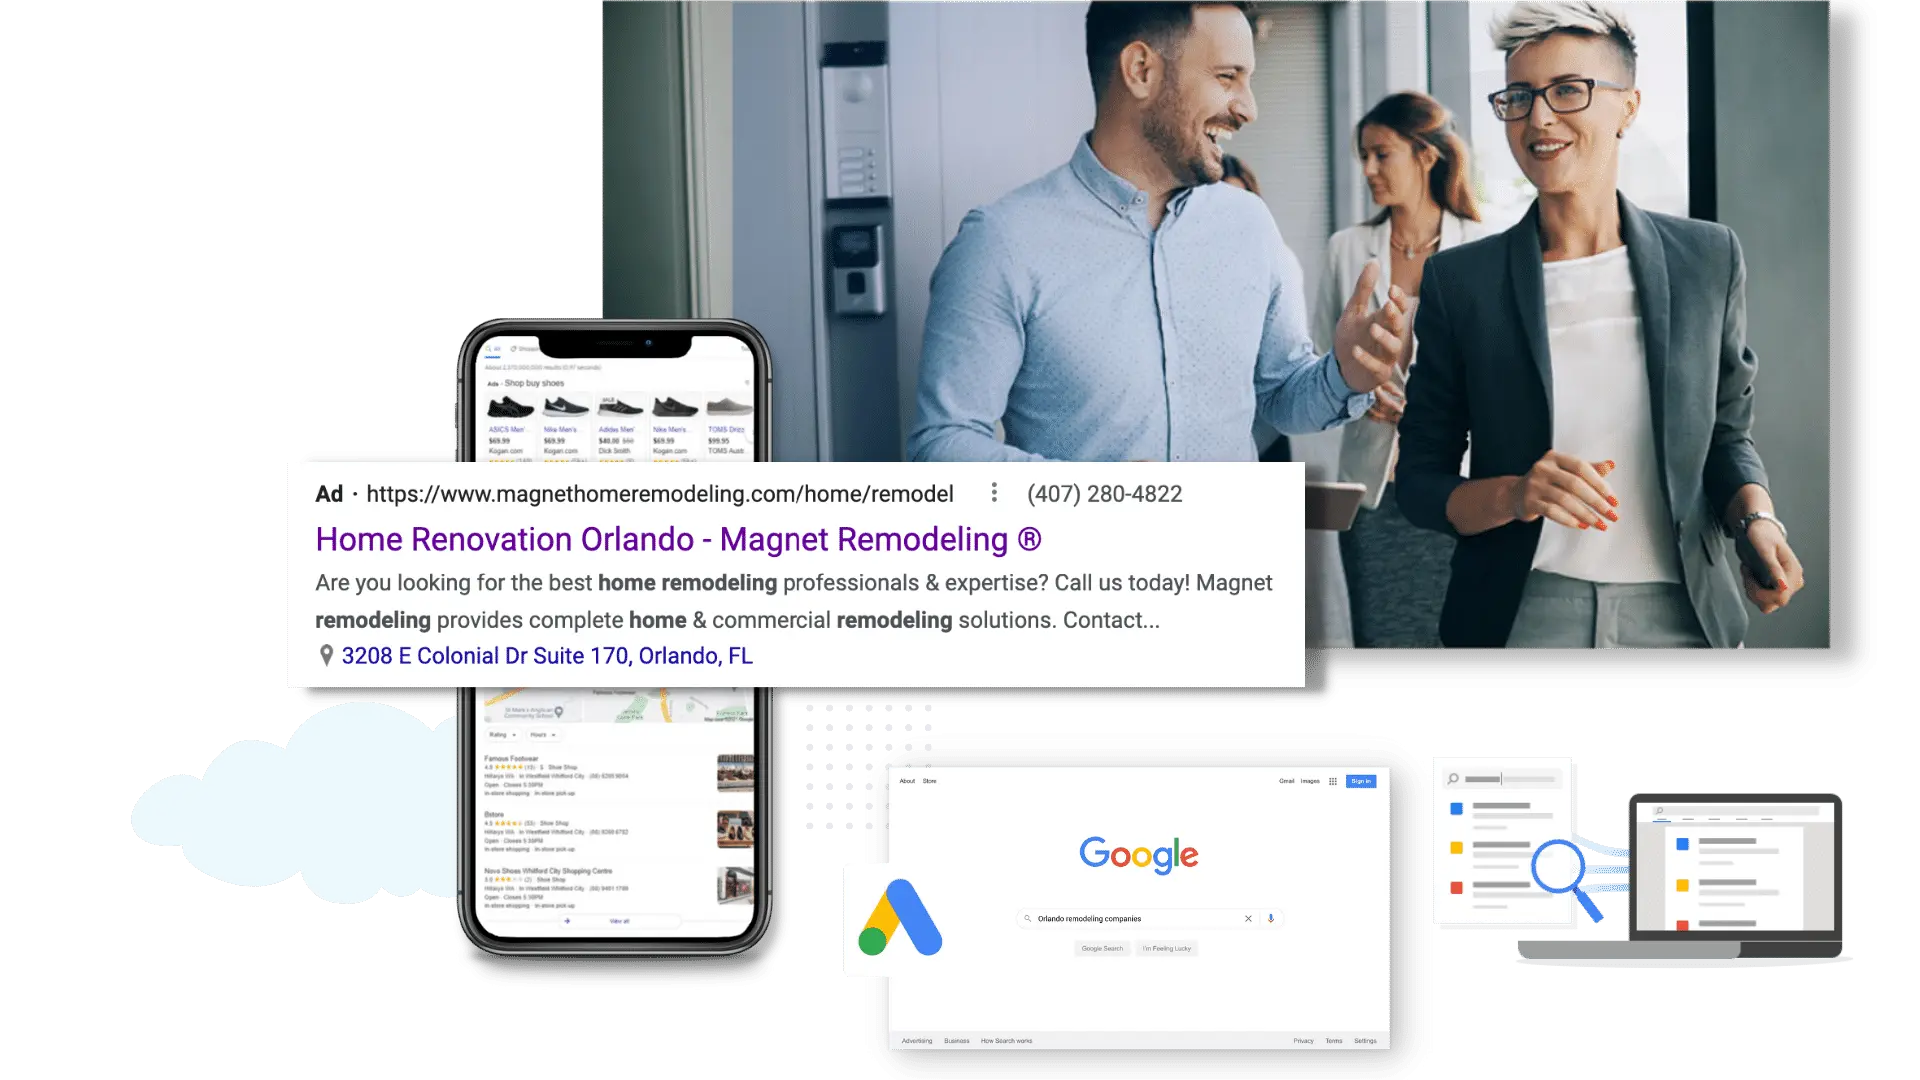 Google Ads Marketing Agency Services